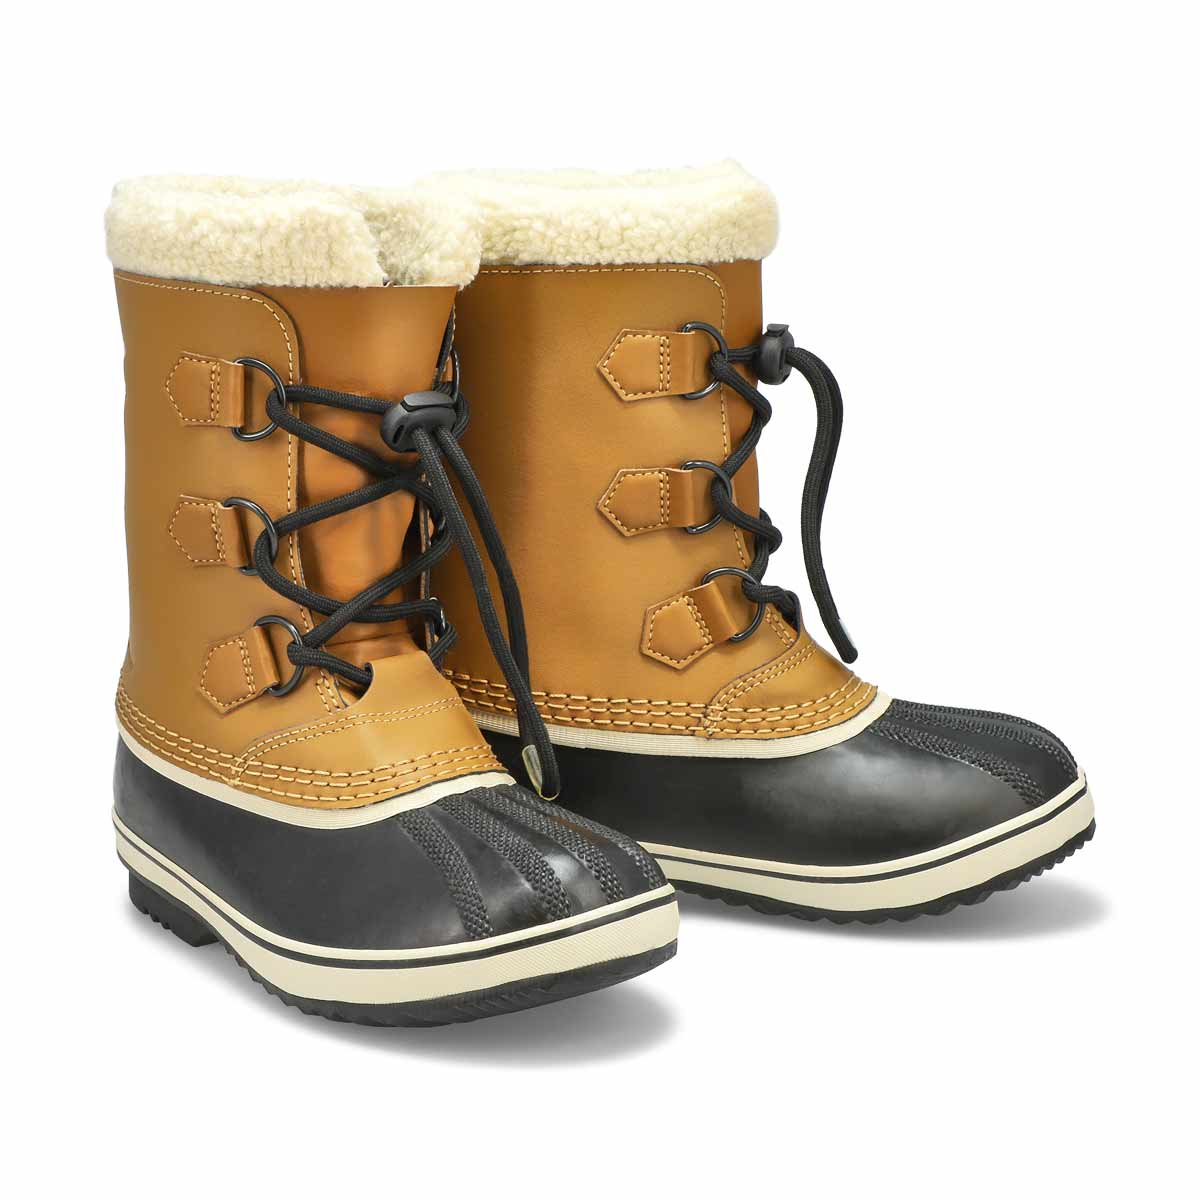 Kids' Yoot PacTP Waterproof Snow Boot - Mesquite